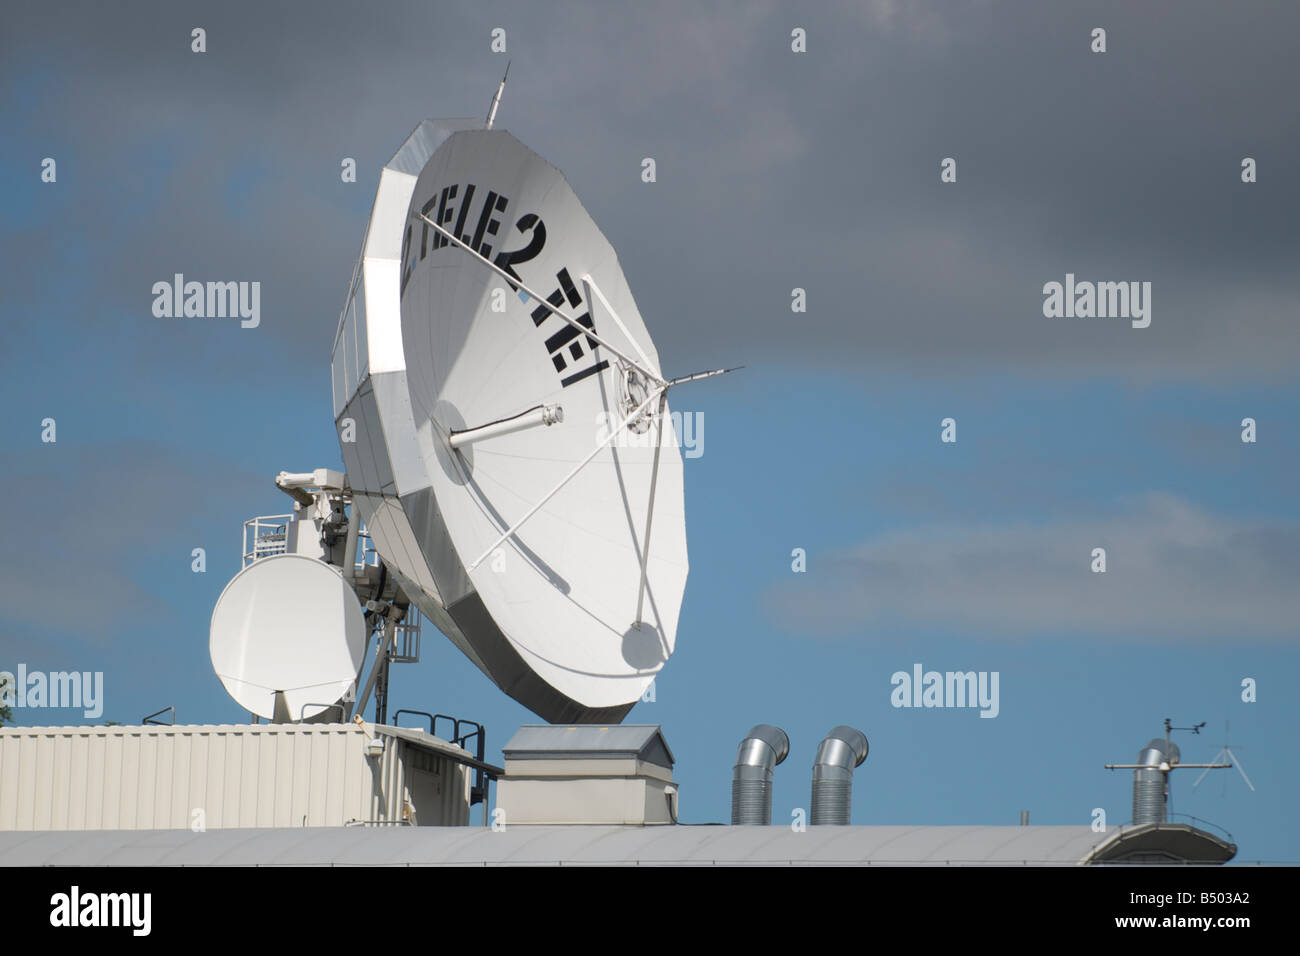 Tele satelital fotografías e imágenes de alta resolución - Alamy